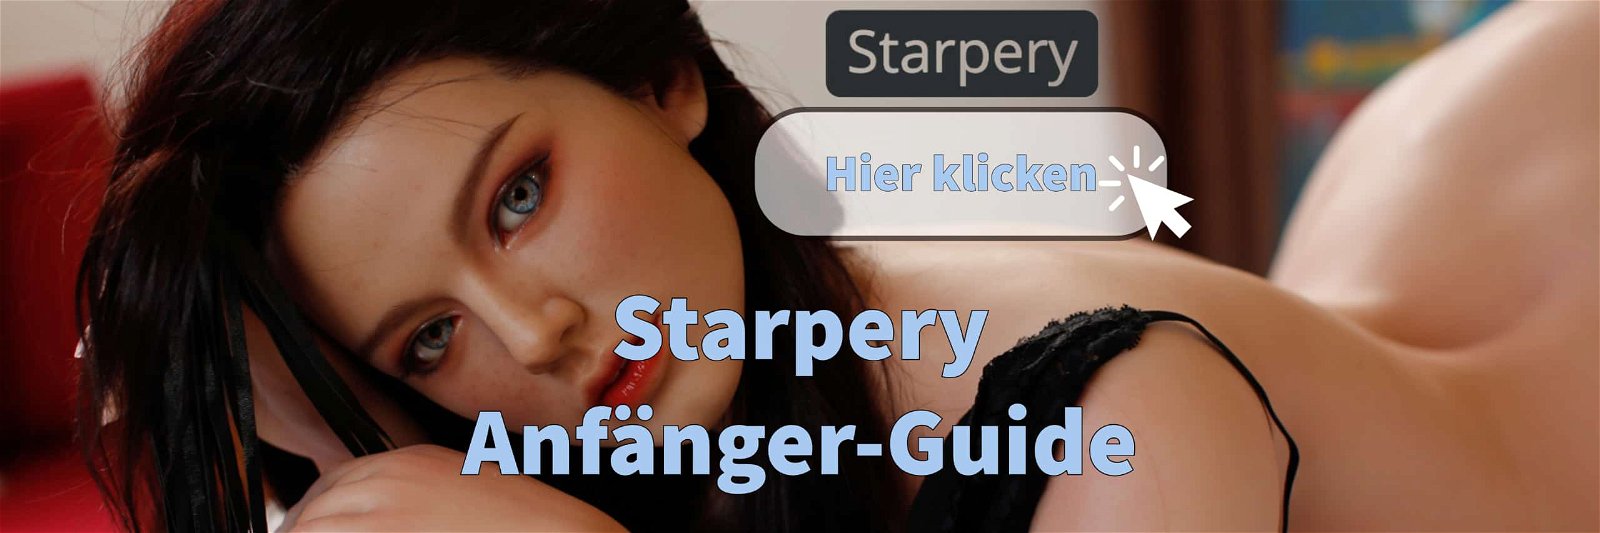 Руководство для начинающих по секс-куклам Starpery